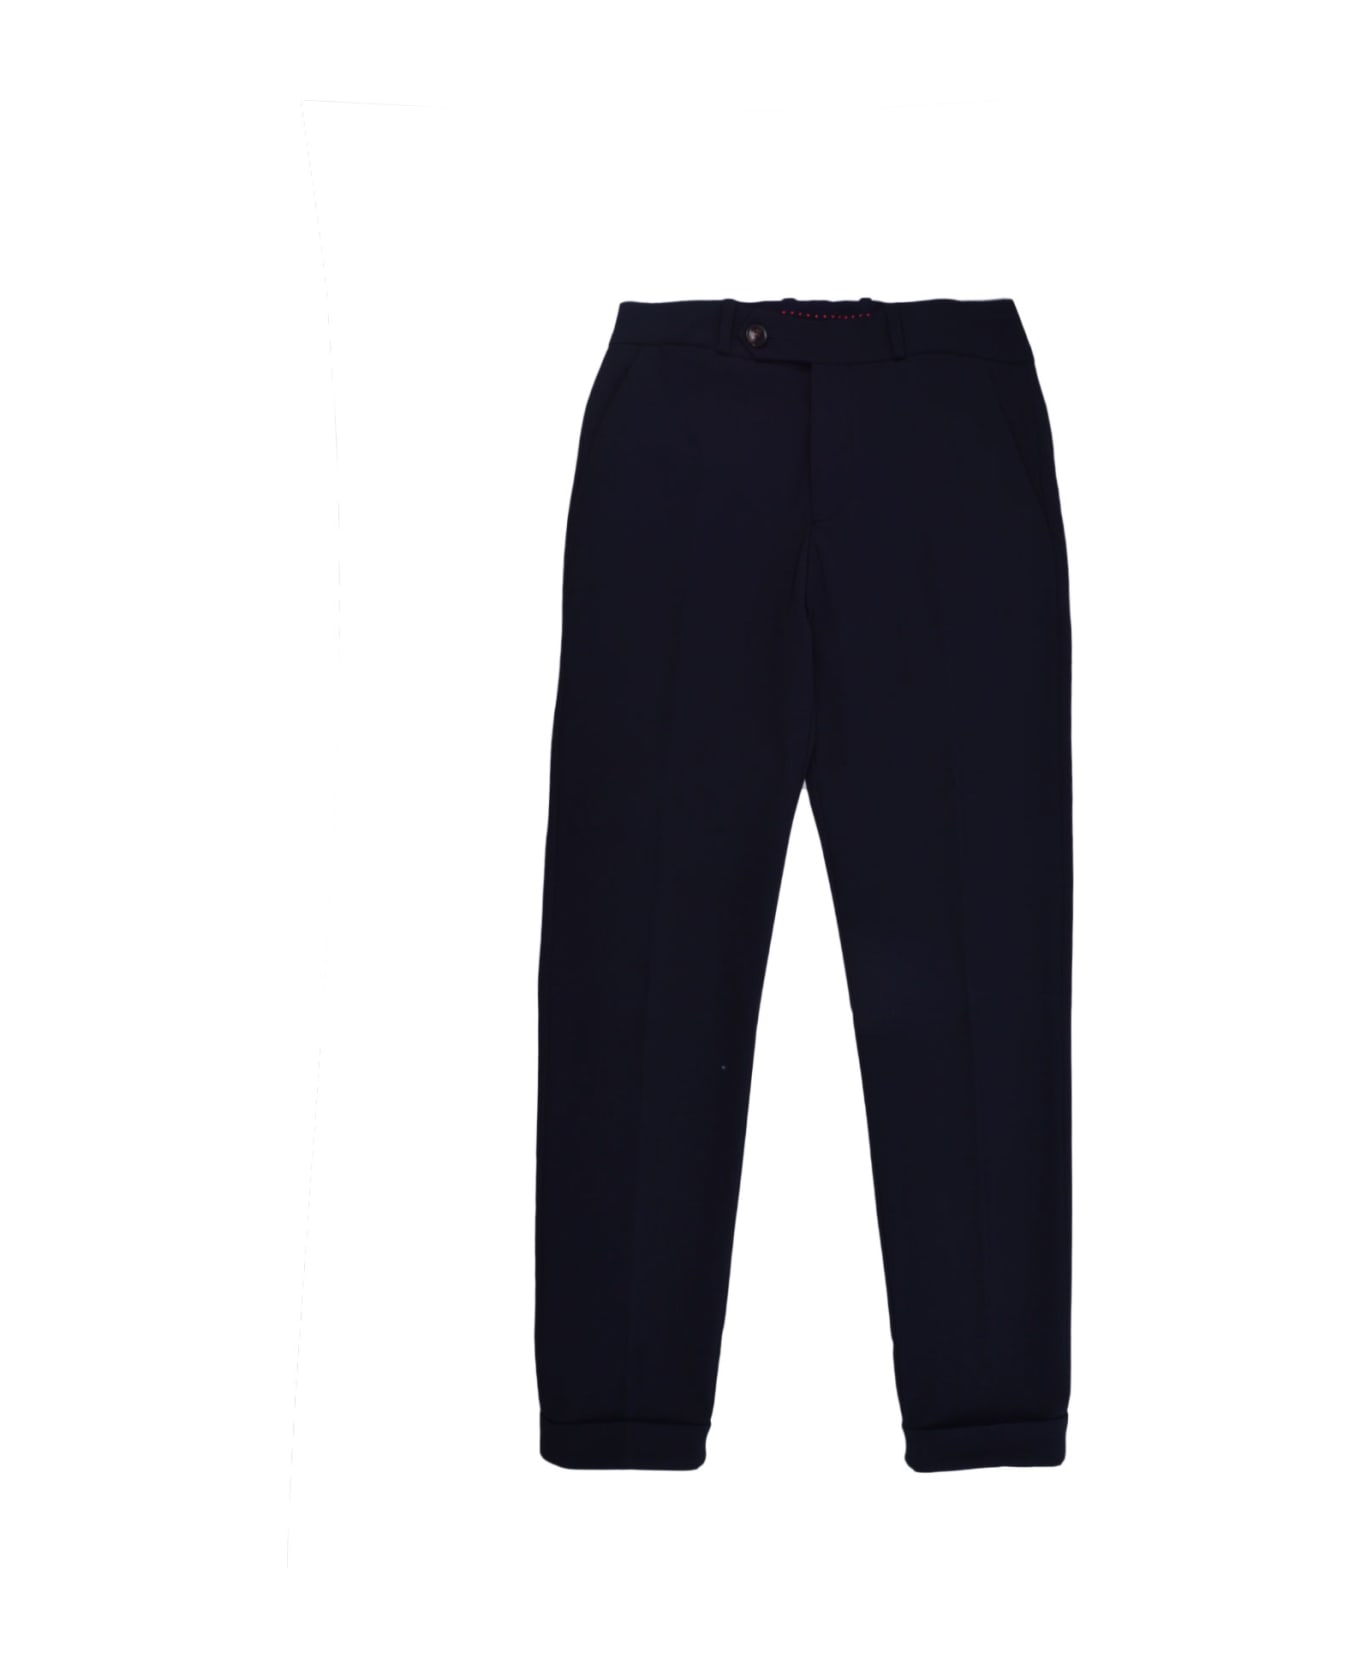 RRD - Roberto Ricci Design Pants Pants - BLUE BLACK